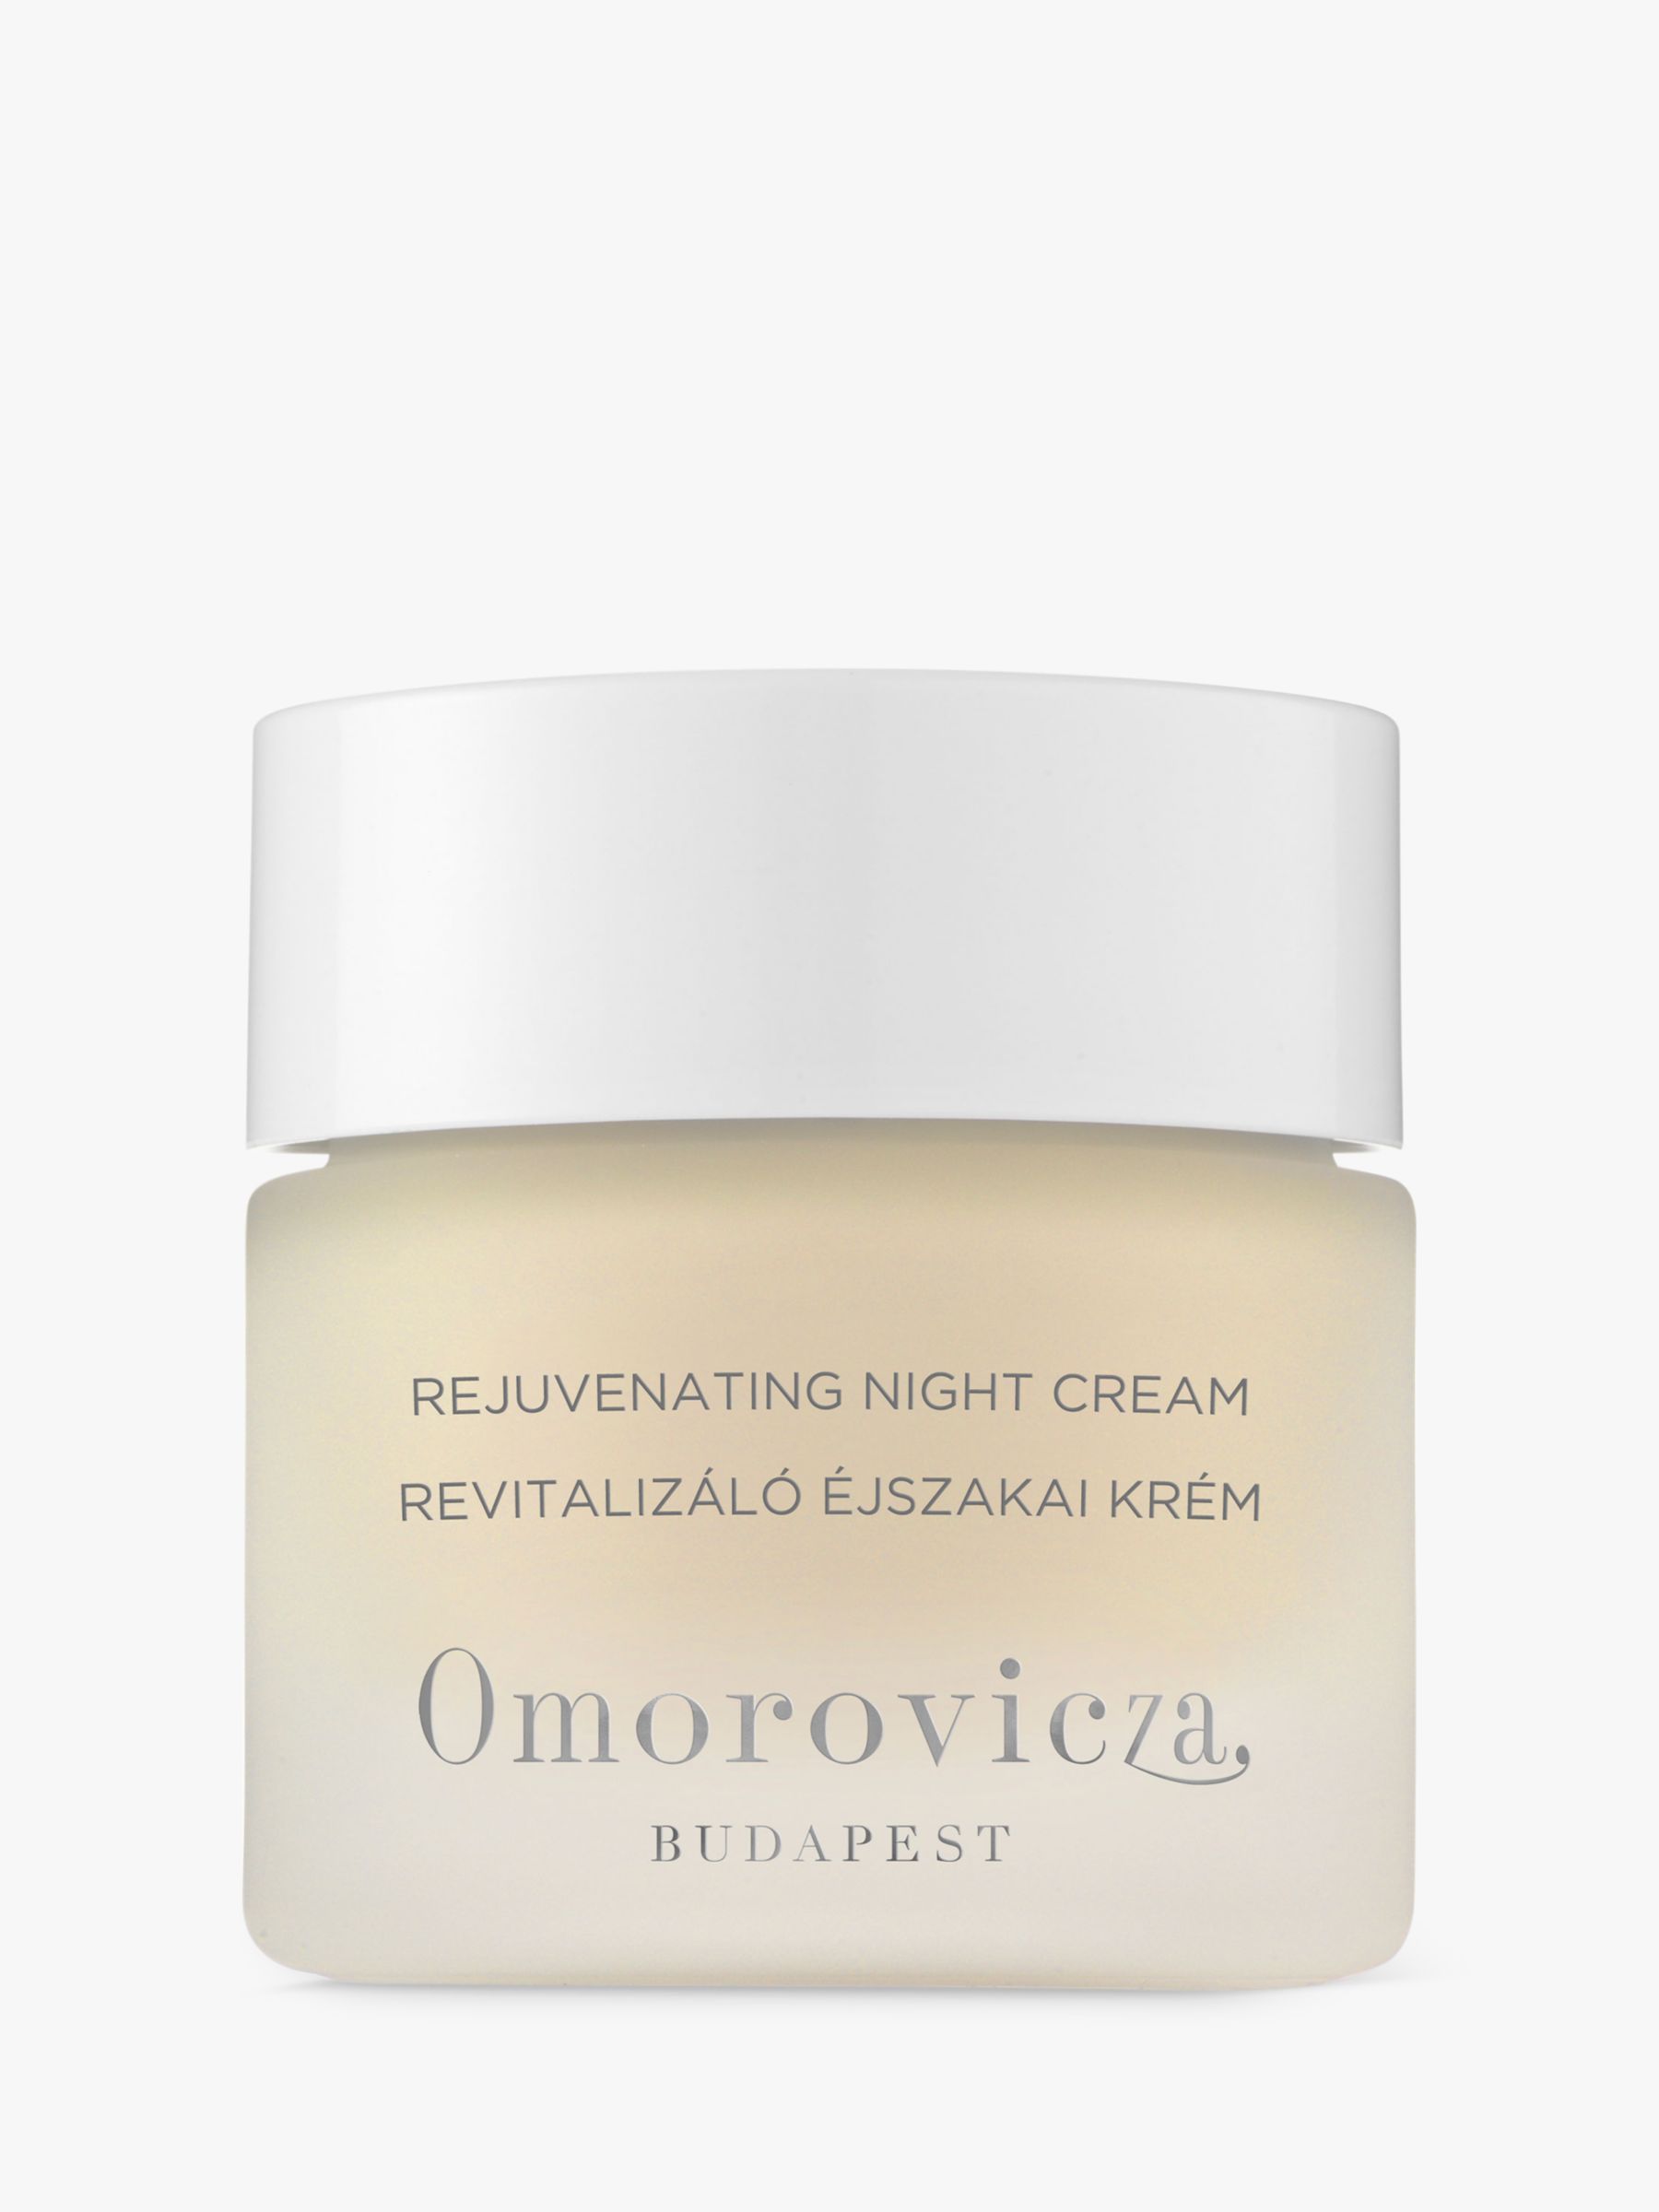 Omorovicza Rejuvenating Night Cream, 50ml 1